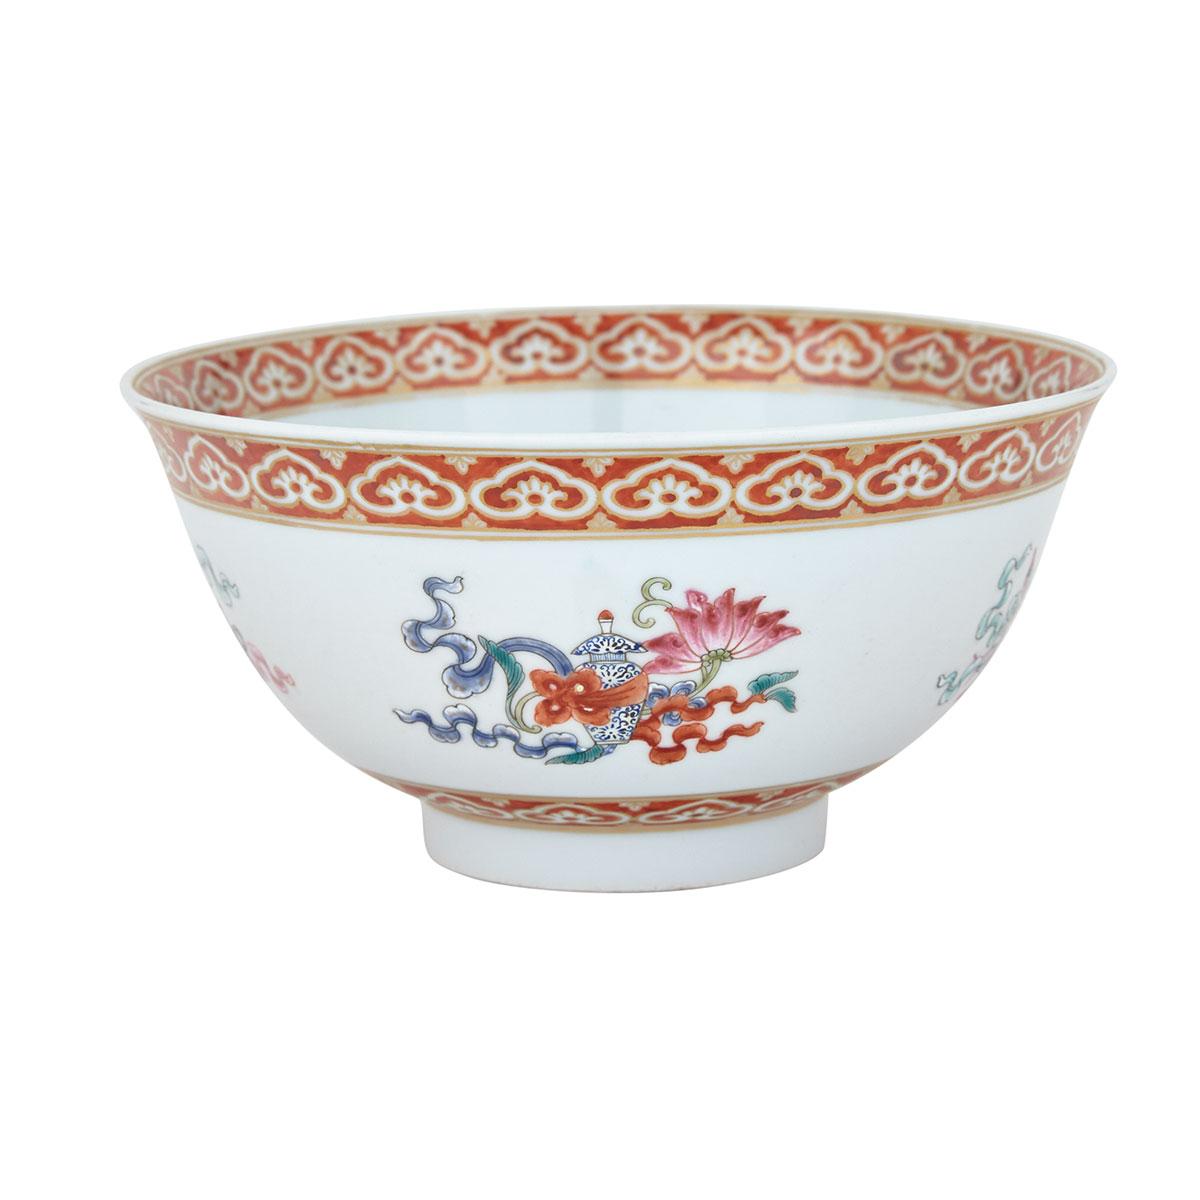 Famille Rose ‘Buddhist Emblem’ Bowl, Guangxu Mark and Period (1875-1908)